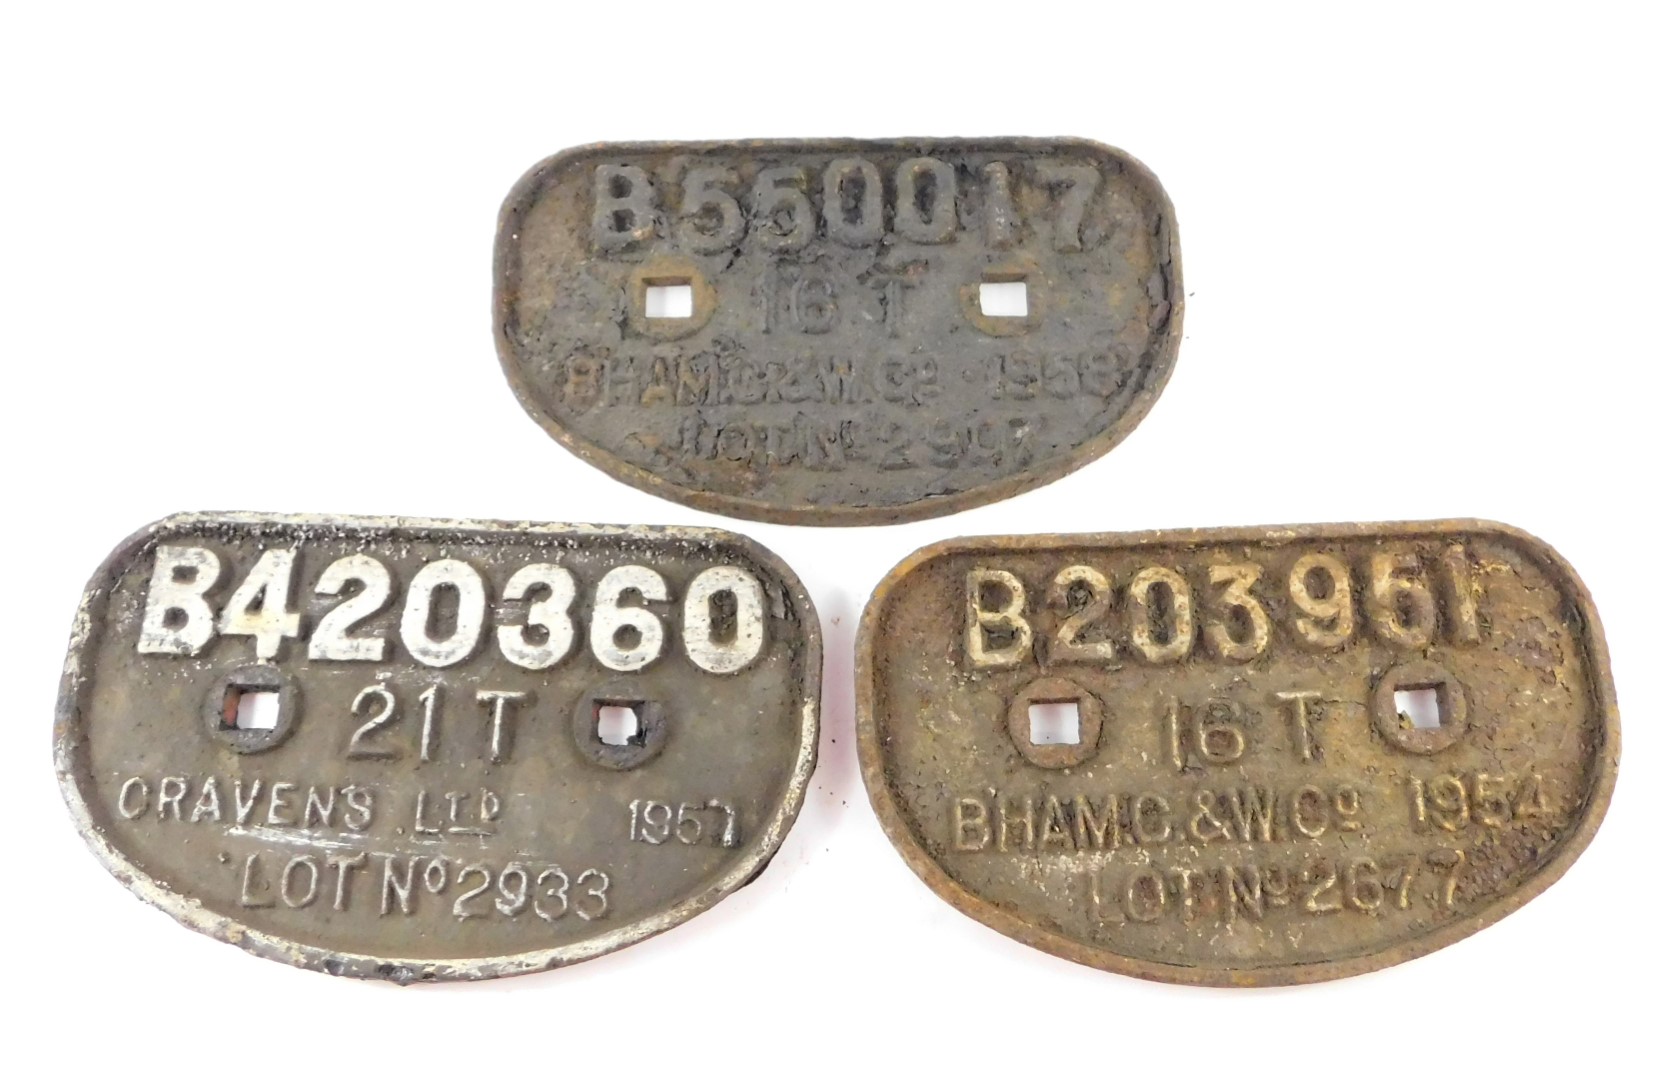 Three cast iron railway wagon plates, comprising B550017 16T B'ham. C. & .W.Co. 1958 Lot No 2907.,